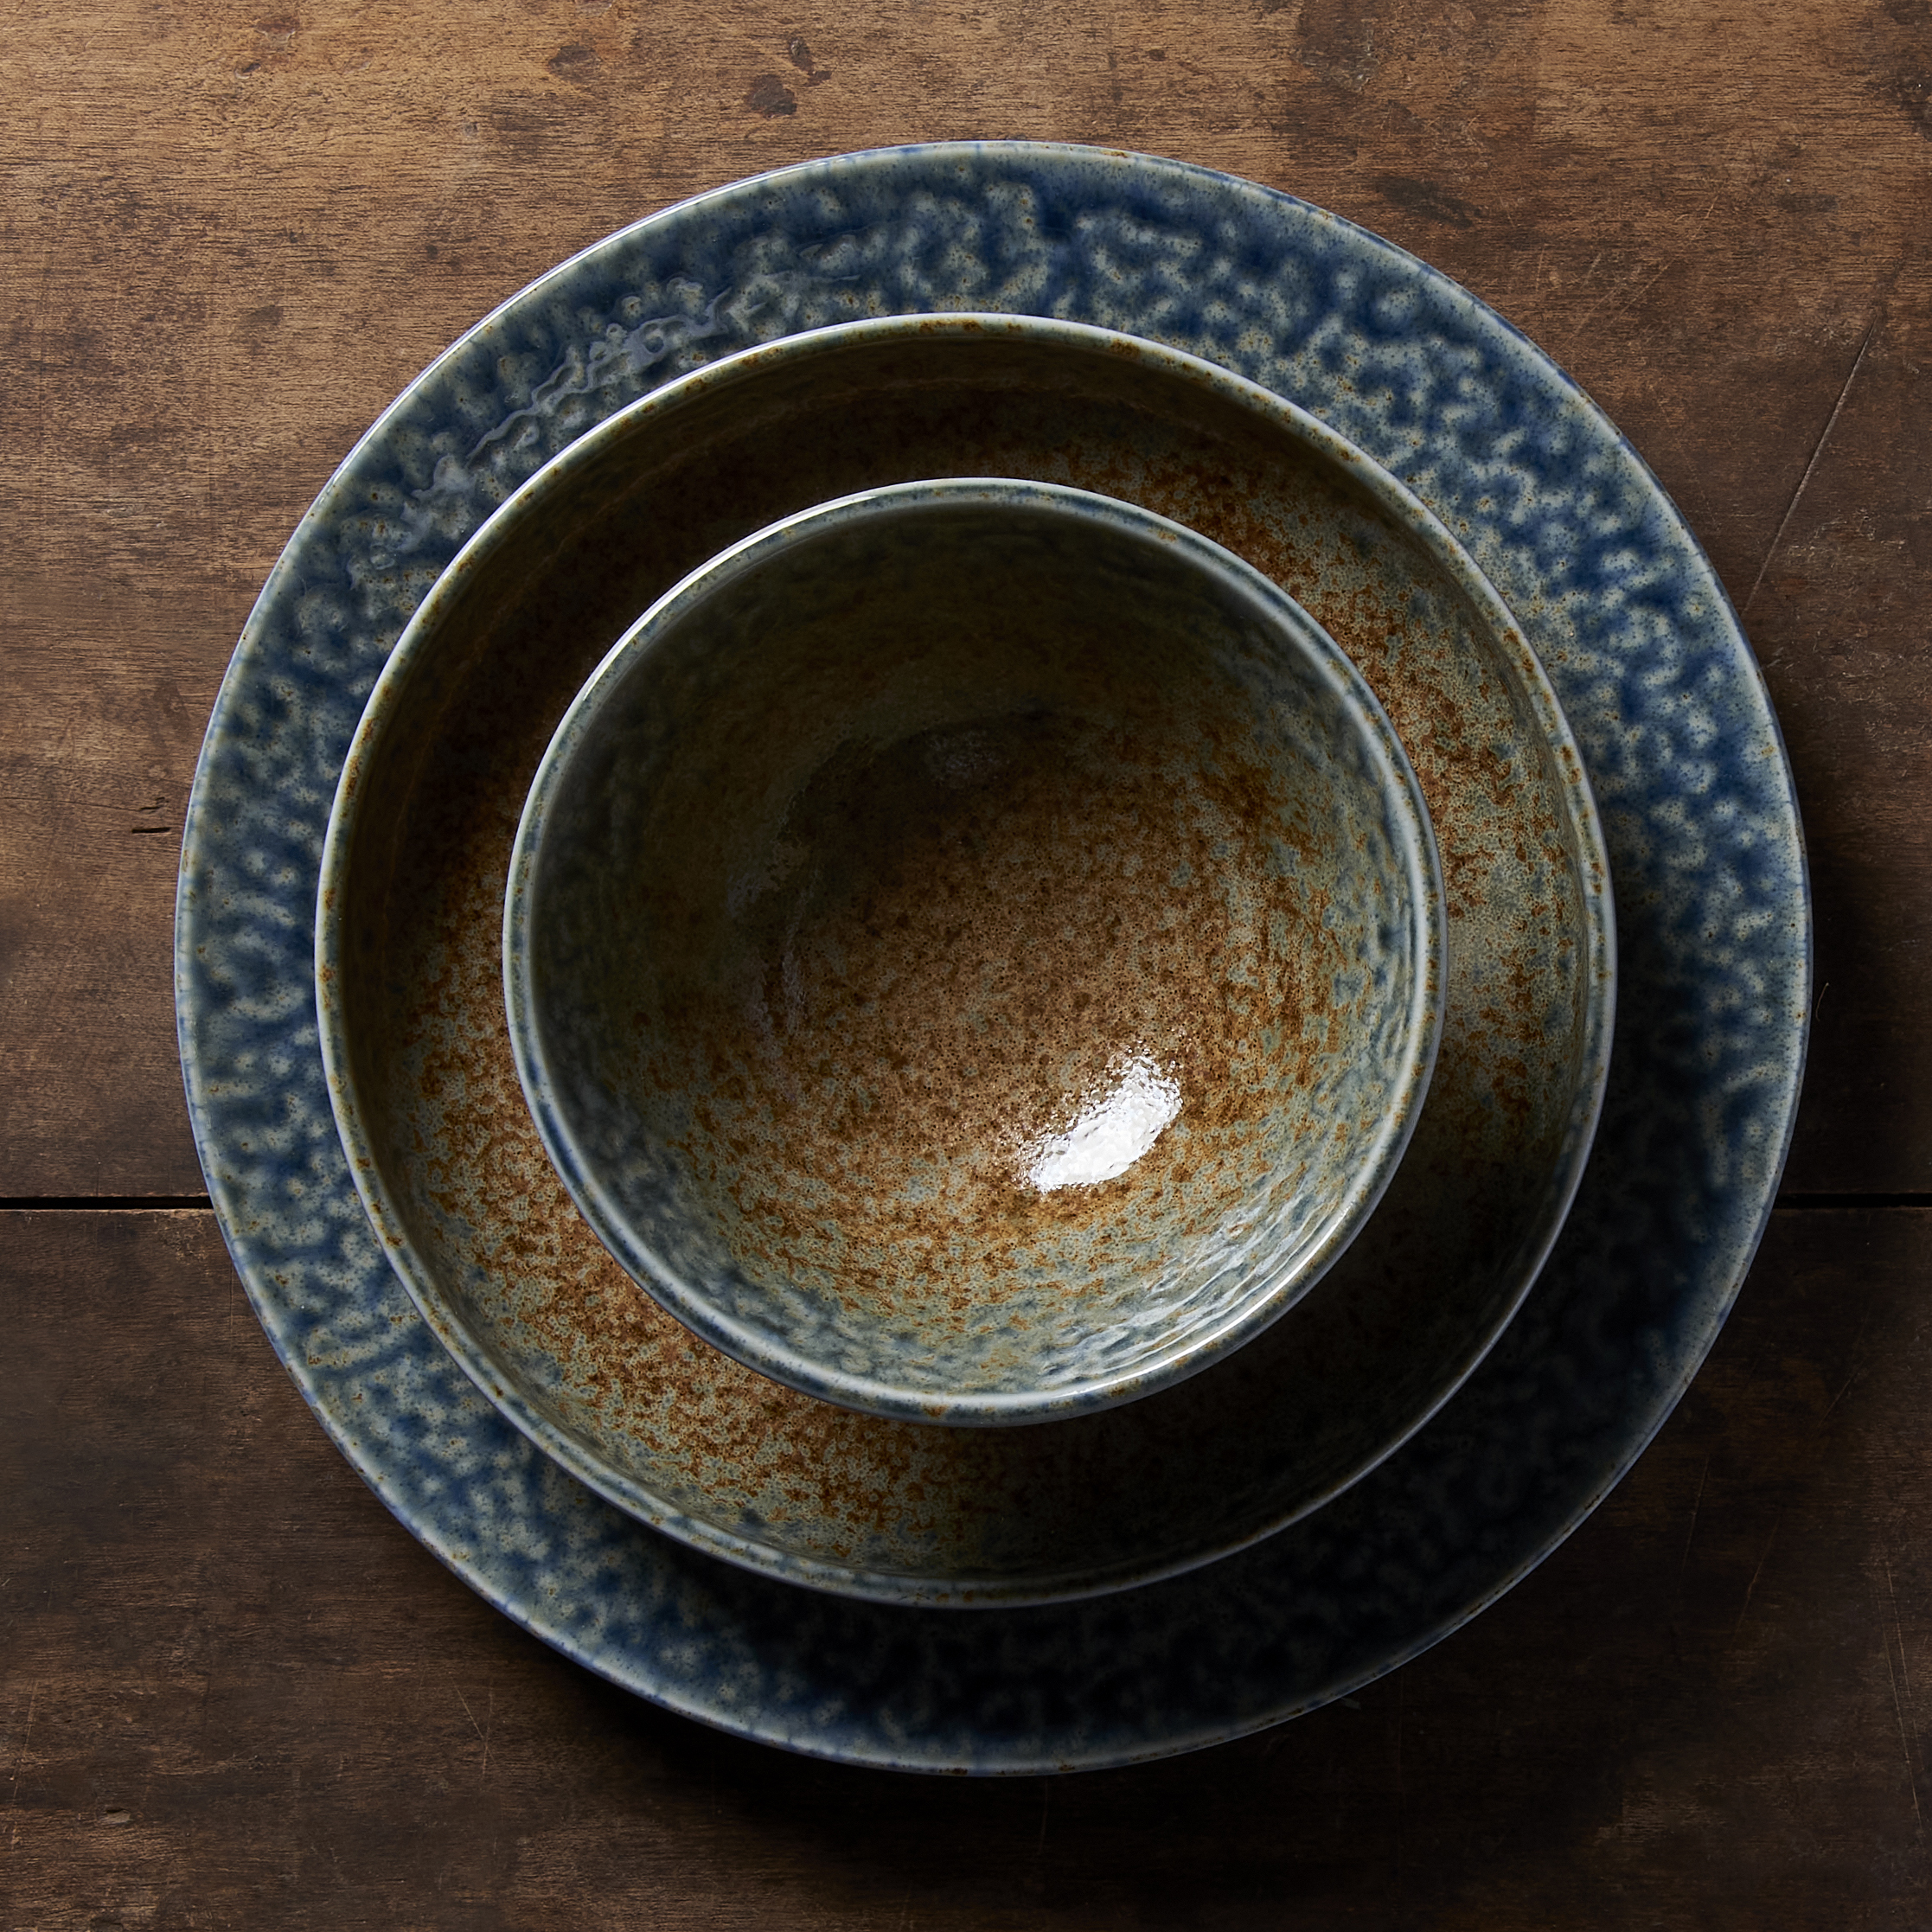 Brown and blue ramen bowl